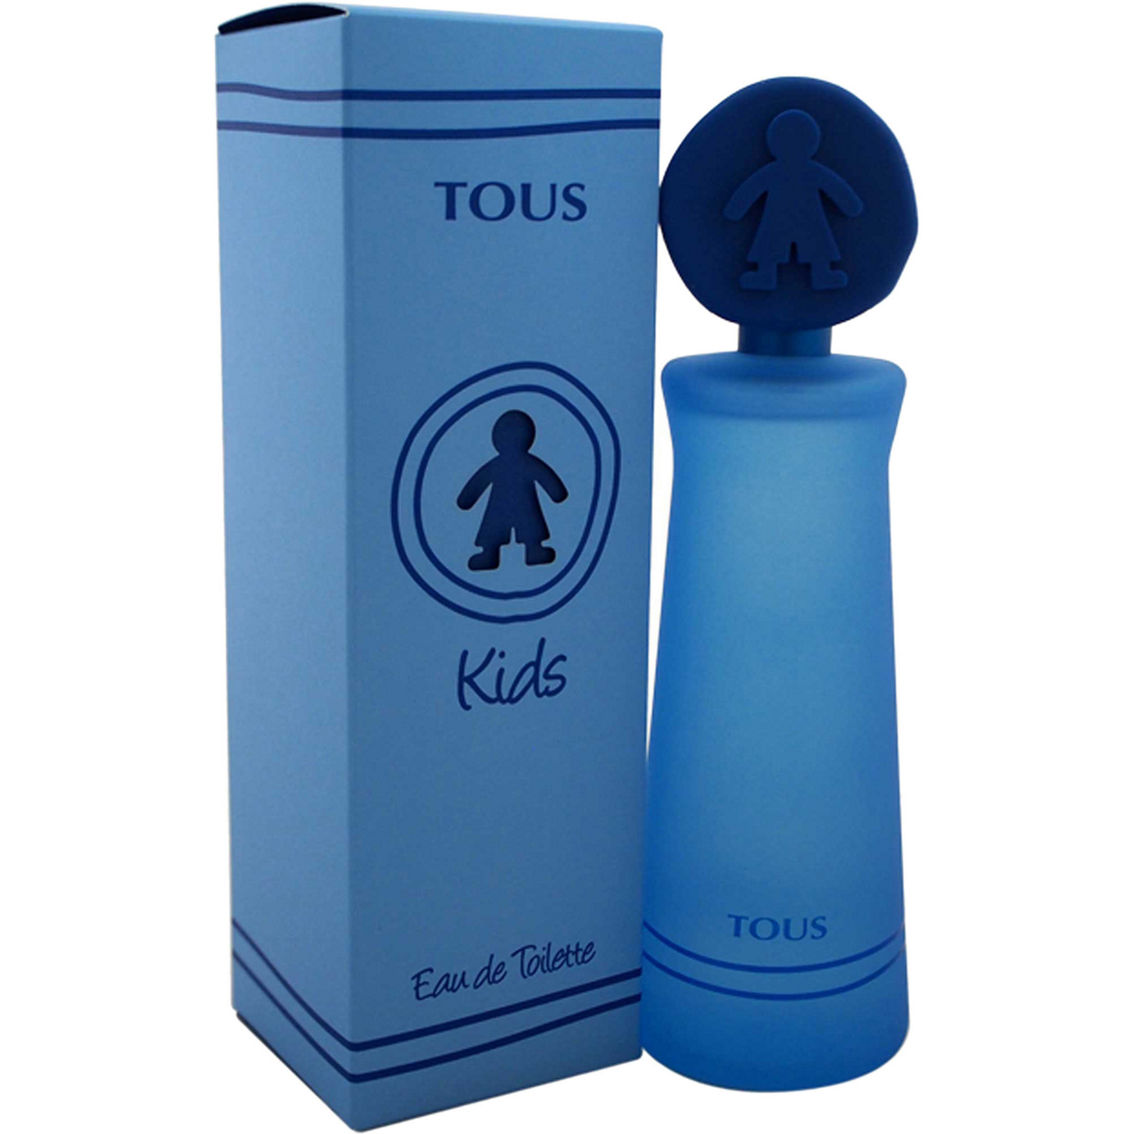 Tous Kids Boy by Tous for Kids Eau De Toilette 3.4 oz. Spray - Image 2 of 2